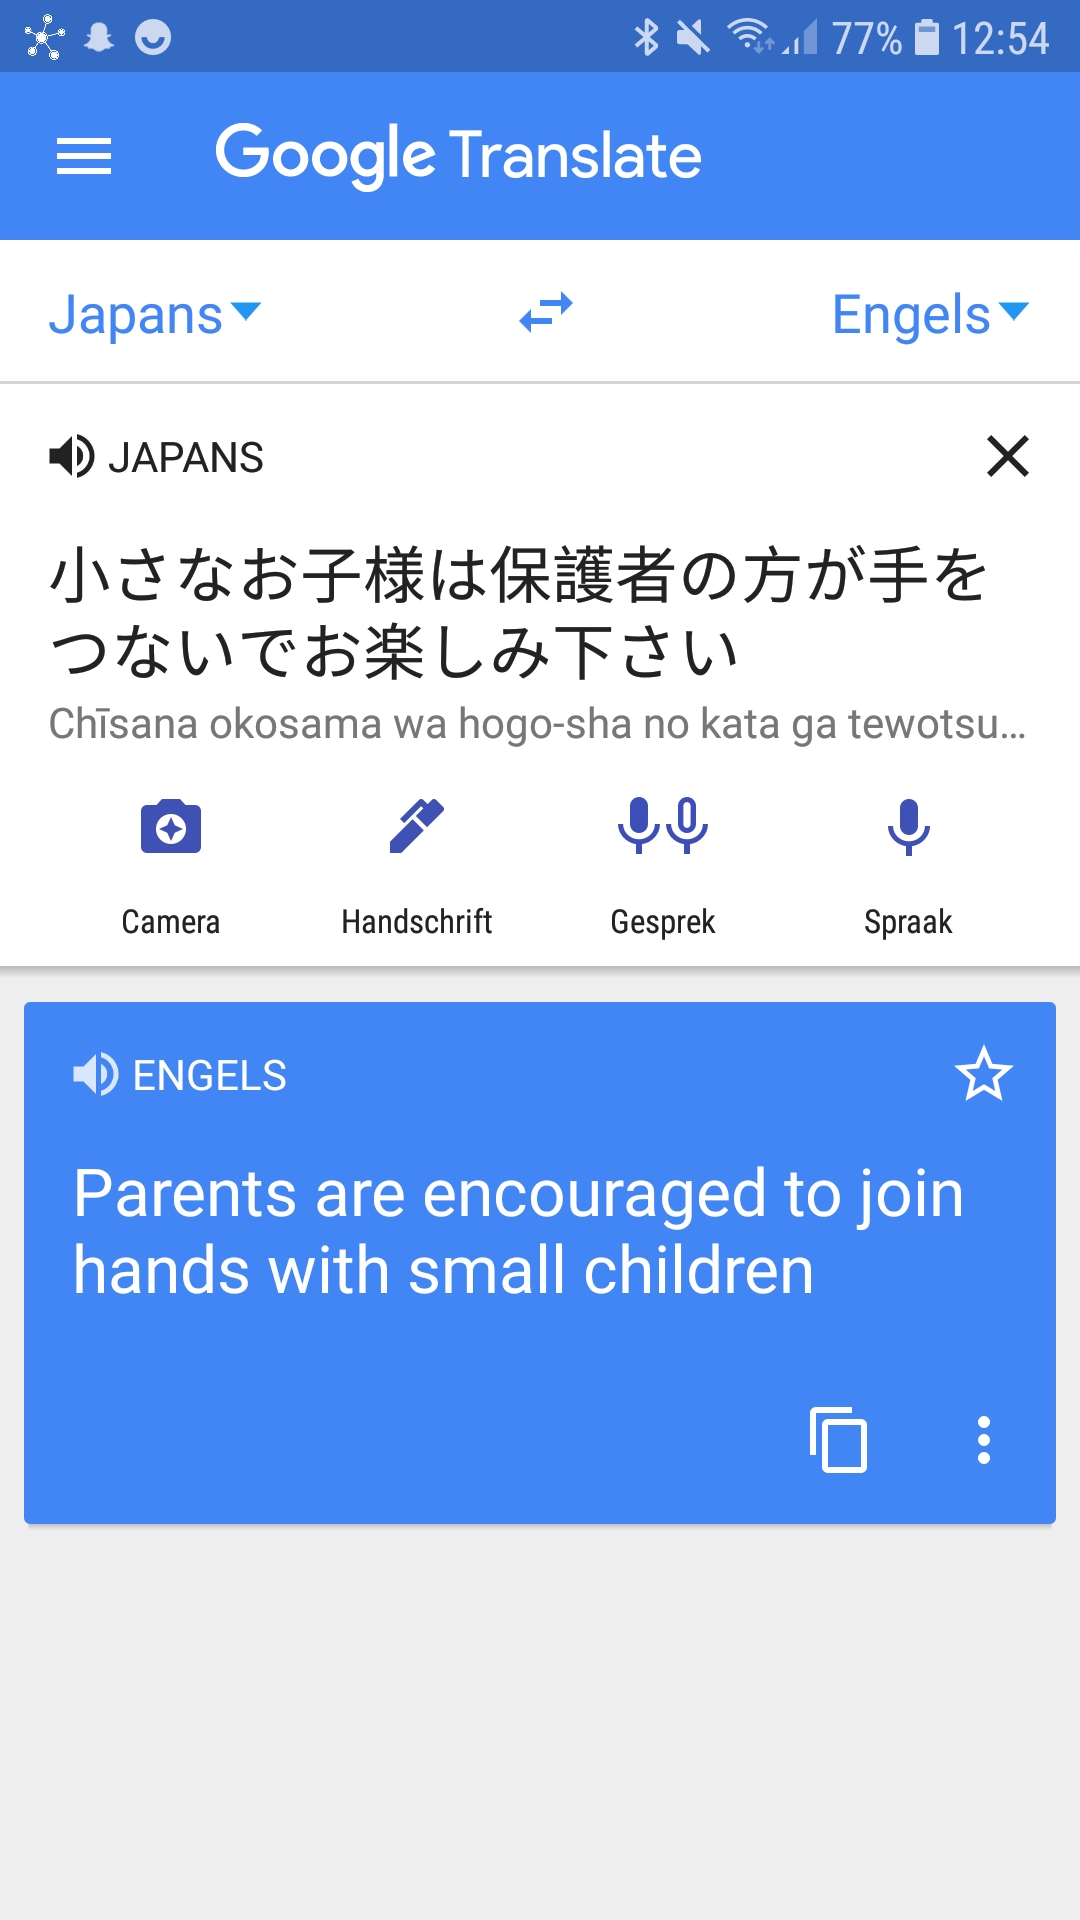 google translate photo to text